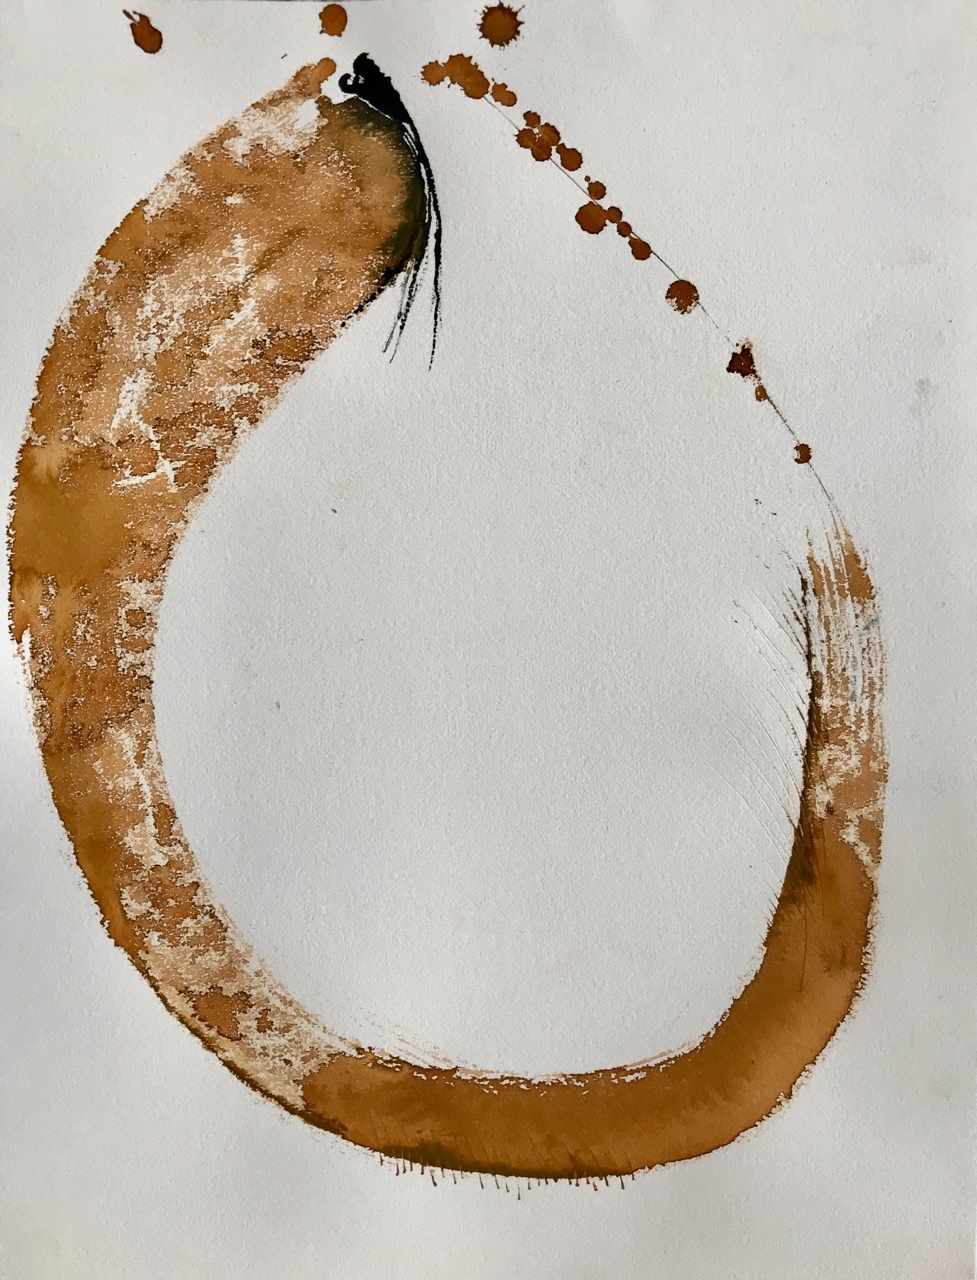 Bananana, Pt.4, Aquarell und Tusche auf Papier, 46 x 61 cm, 2018